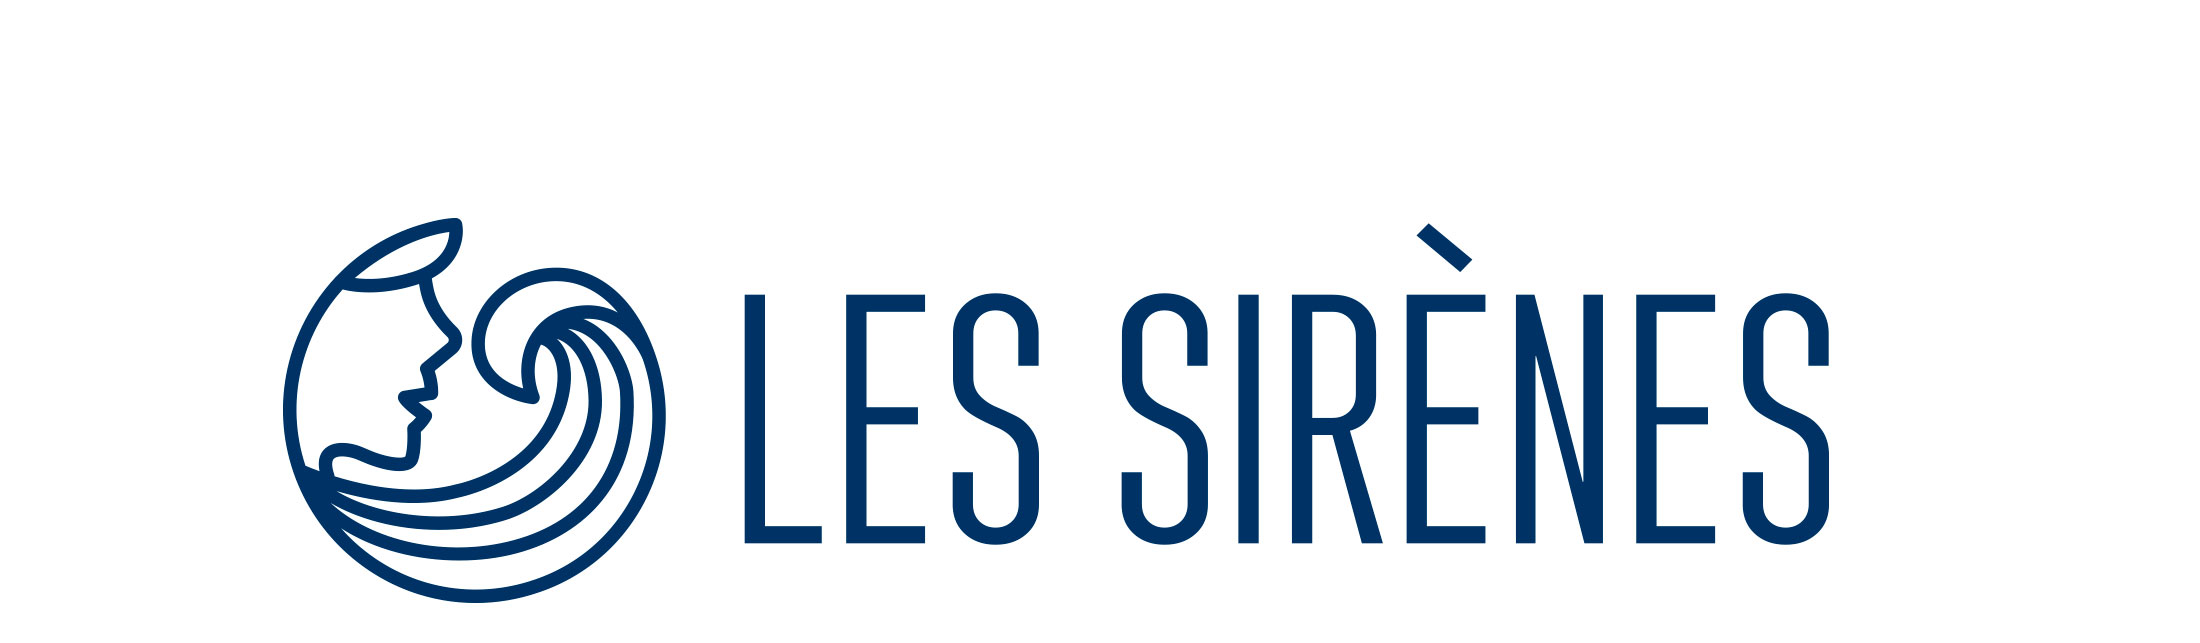 sirenes_01_logo